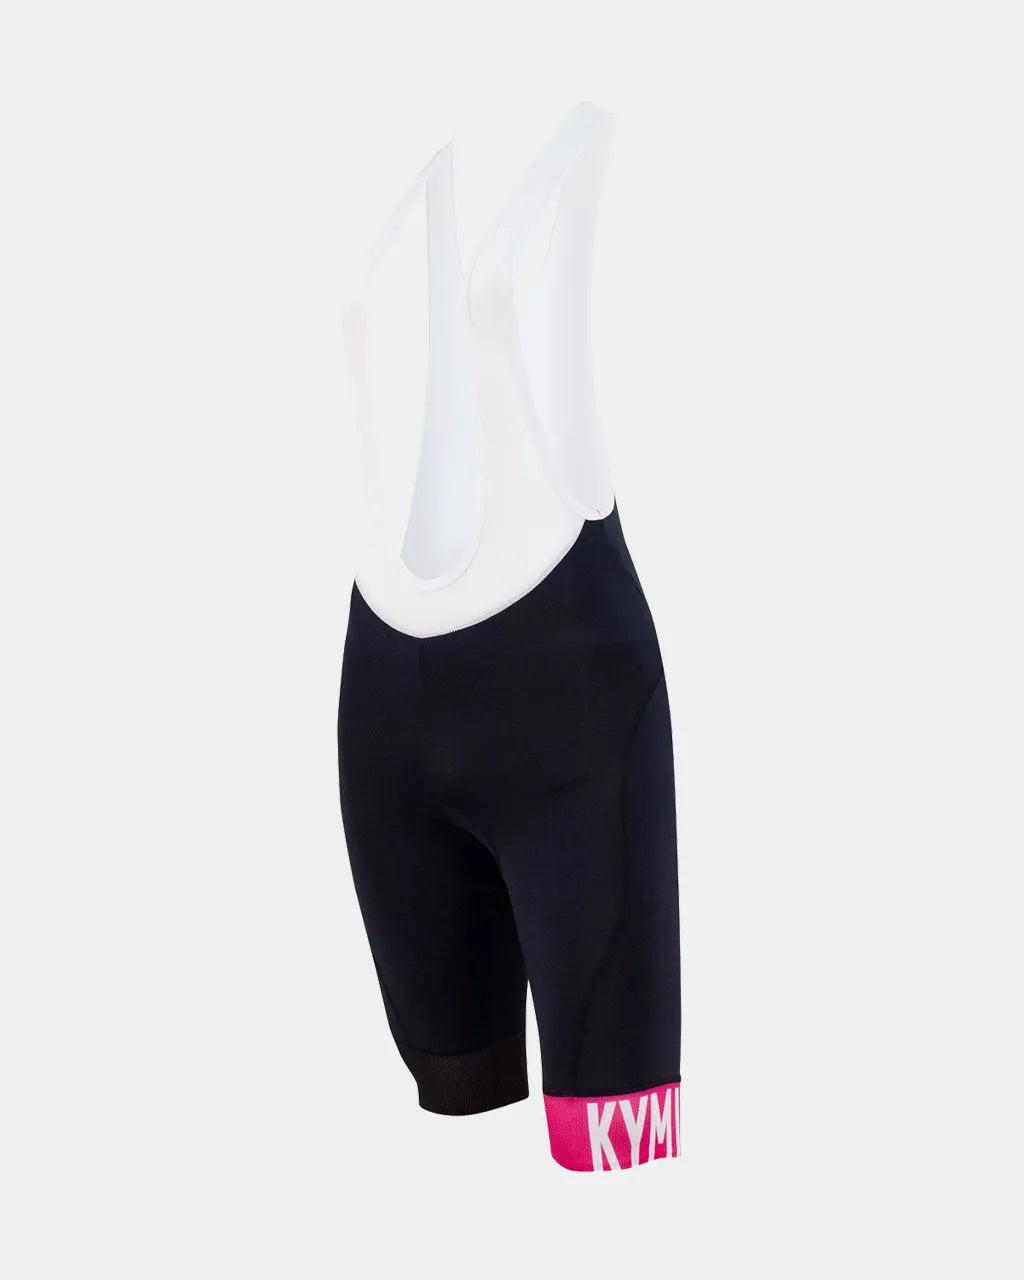 KYMIRA CHARGE Infrared Women's Cycling Bib Shorts